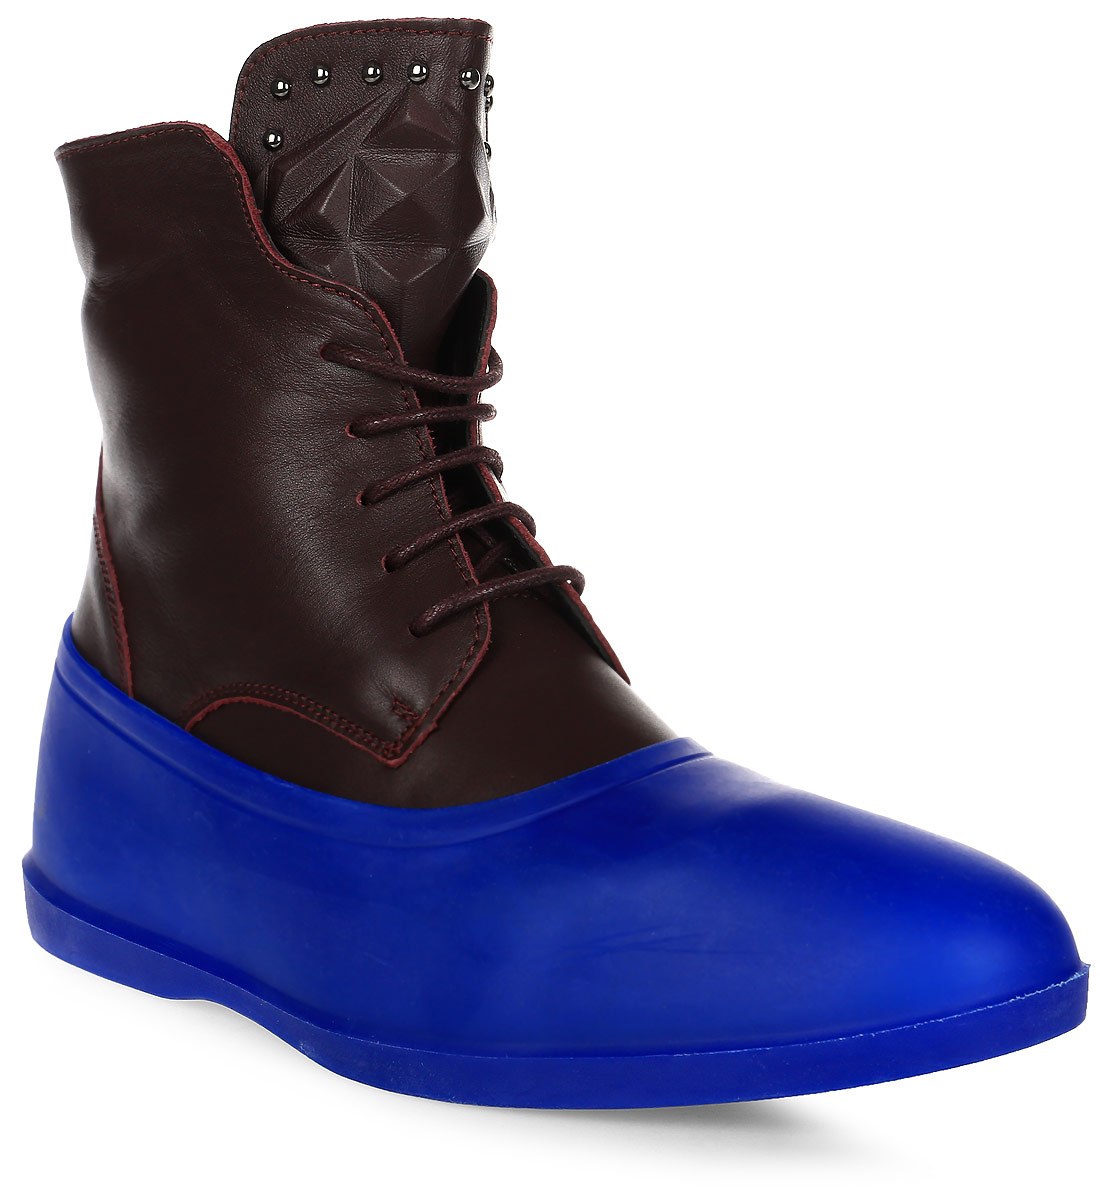 Галоши на обувь мужские Мир Галош, цвет: синий. RSS. Размер 37/38